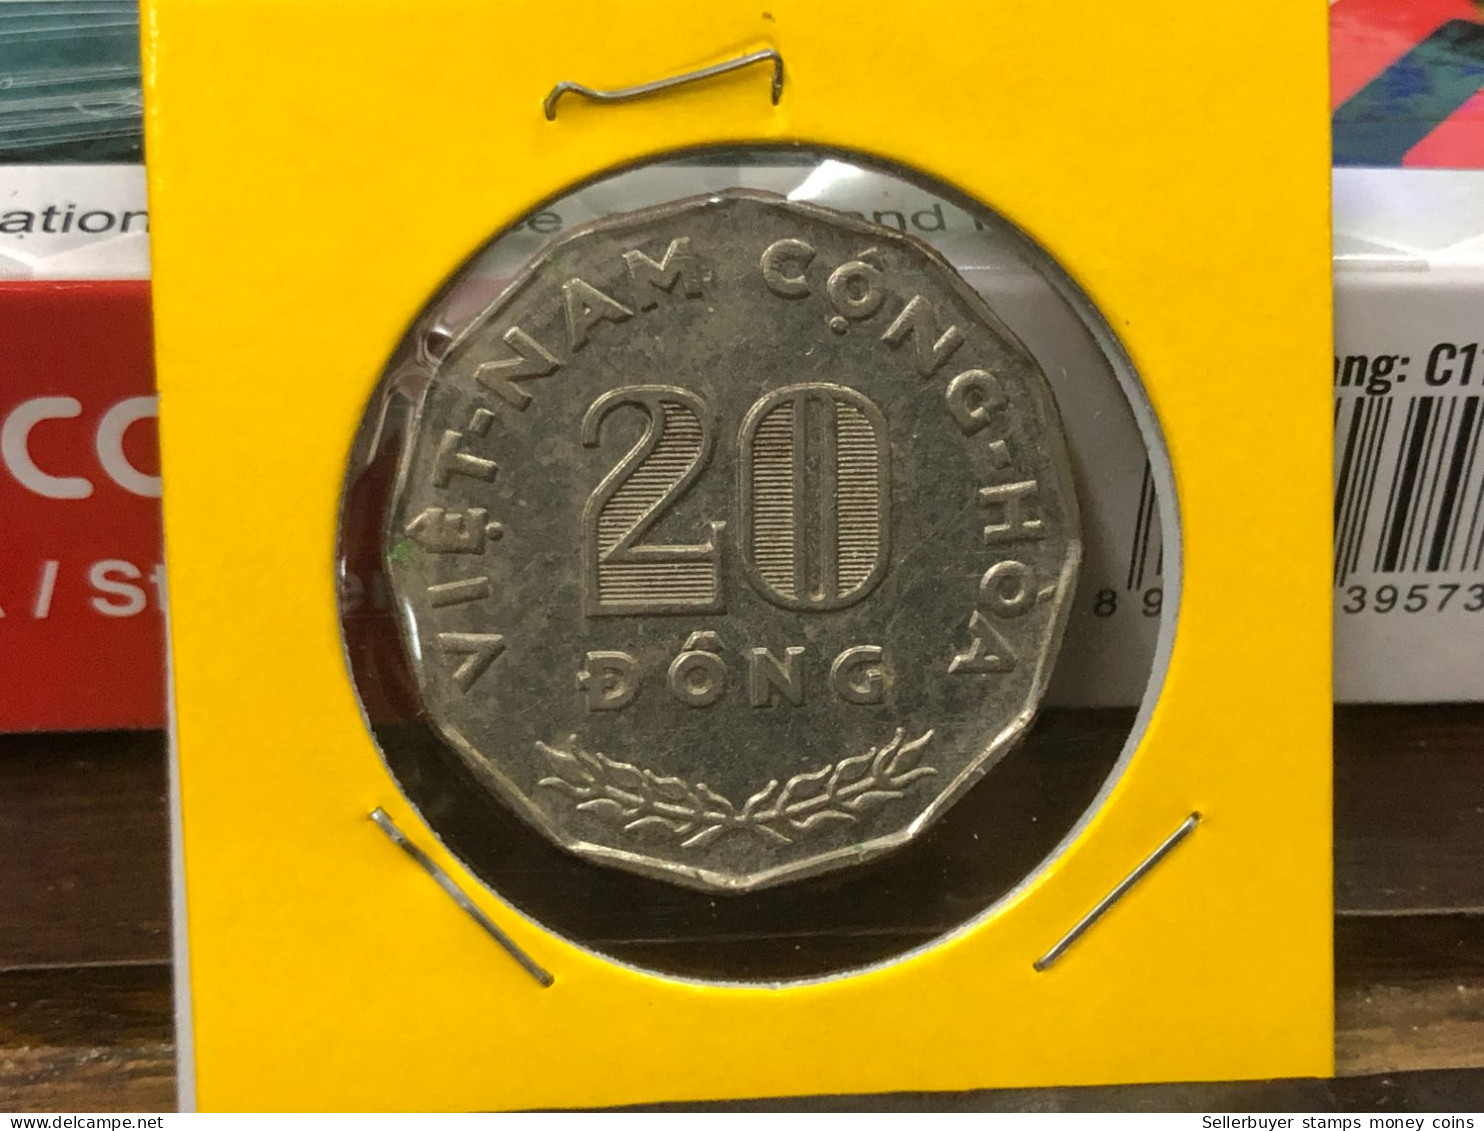 SOUTH VIET-NAM COINS 20 DONG 1968 KM#10-NICKEL CLAD STEEL -1 Pcs- Aunc No 9 - Viêt-Nam